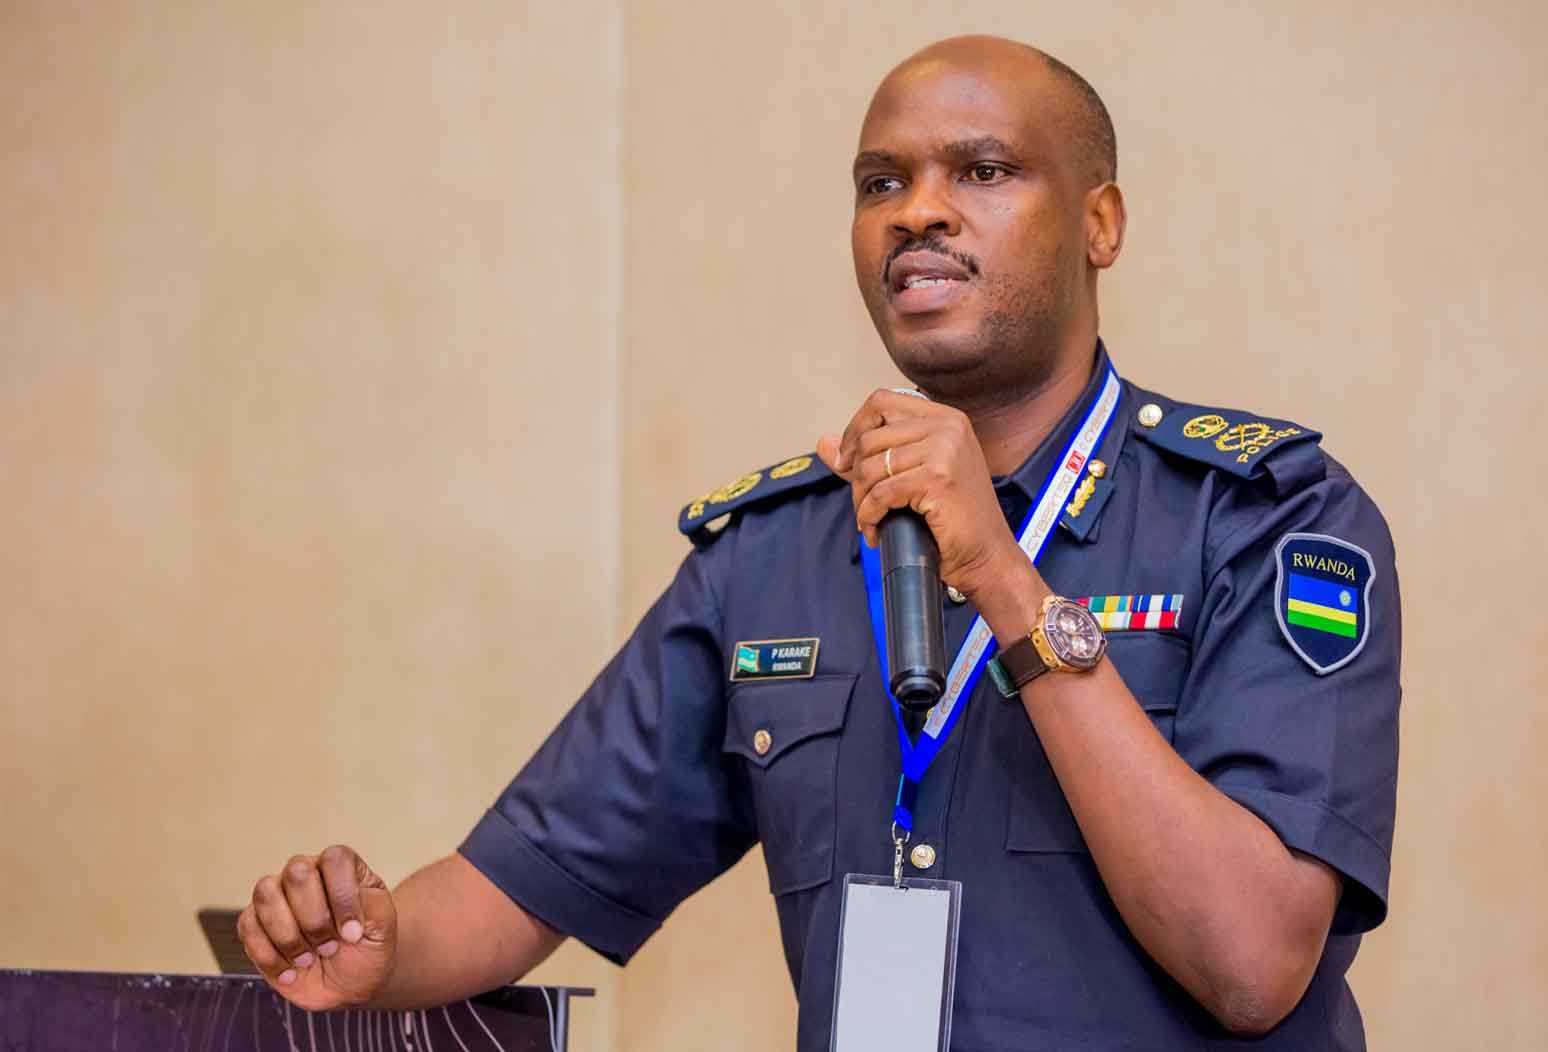 Peter Karake, Assistant Commissioner of Police, Rwanda